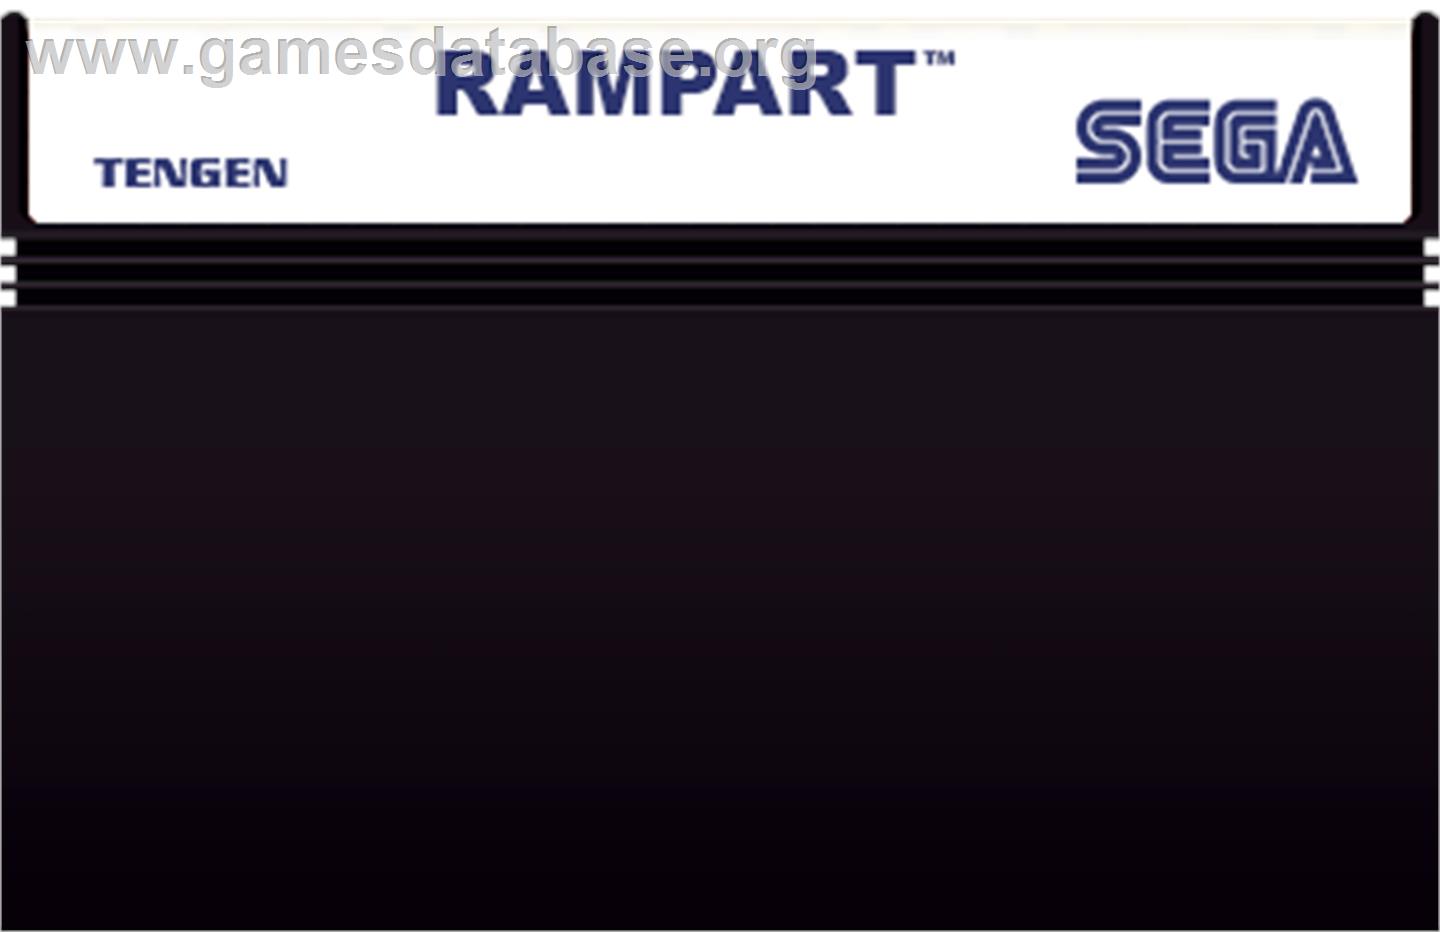 Rampart - Sega Master System - Artwork - Cartridge